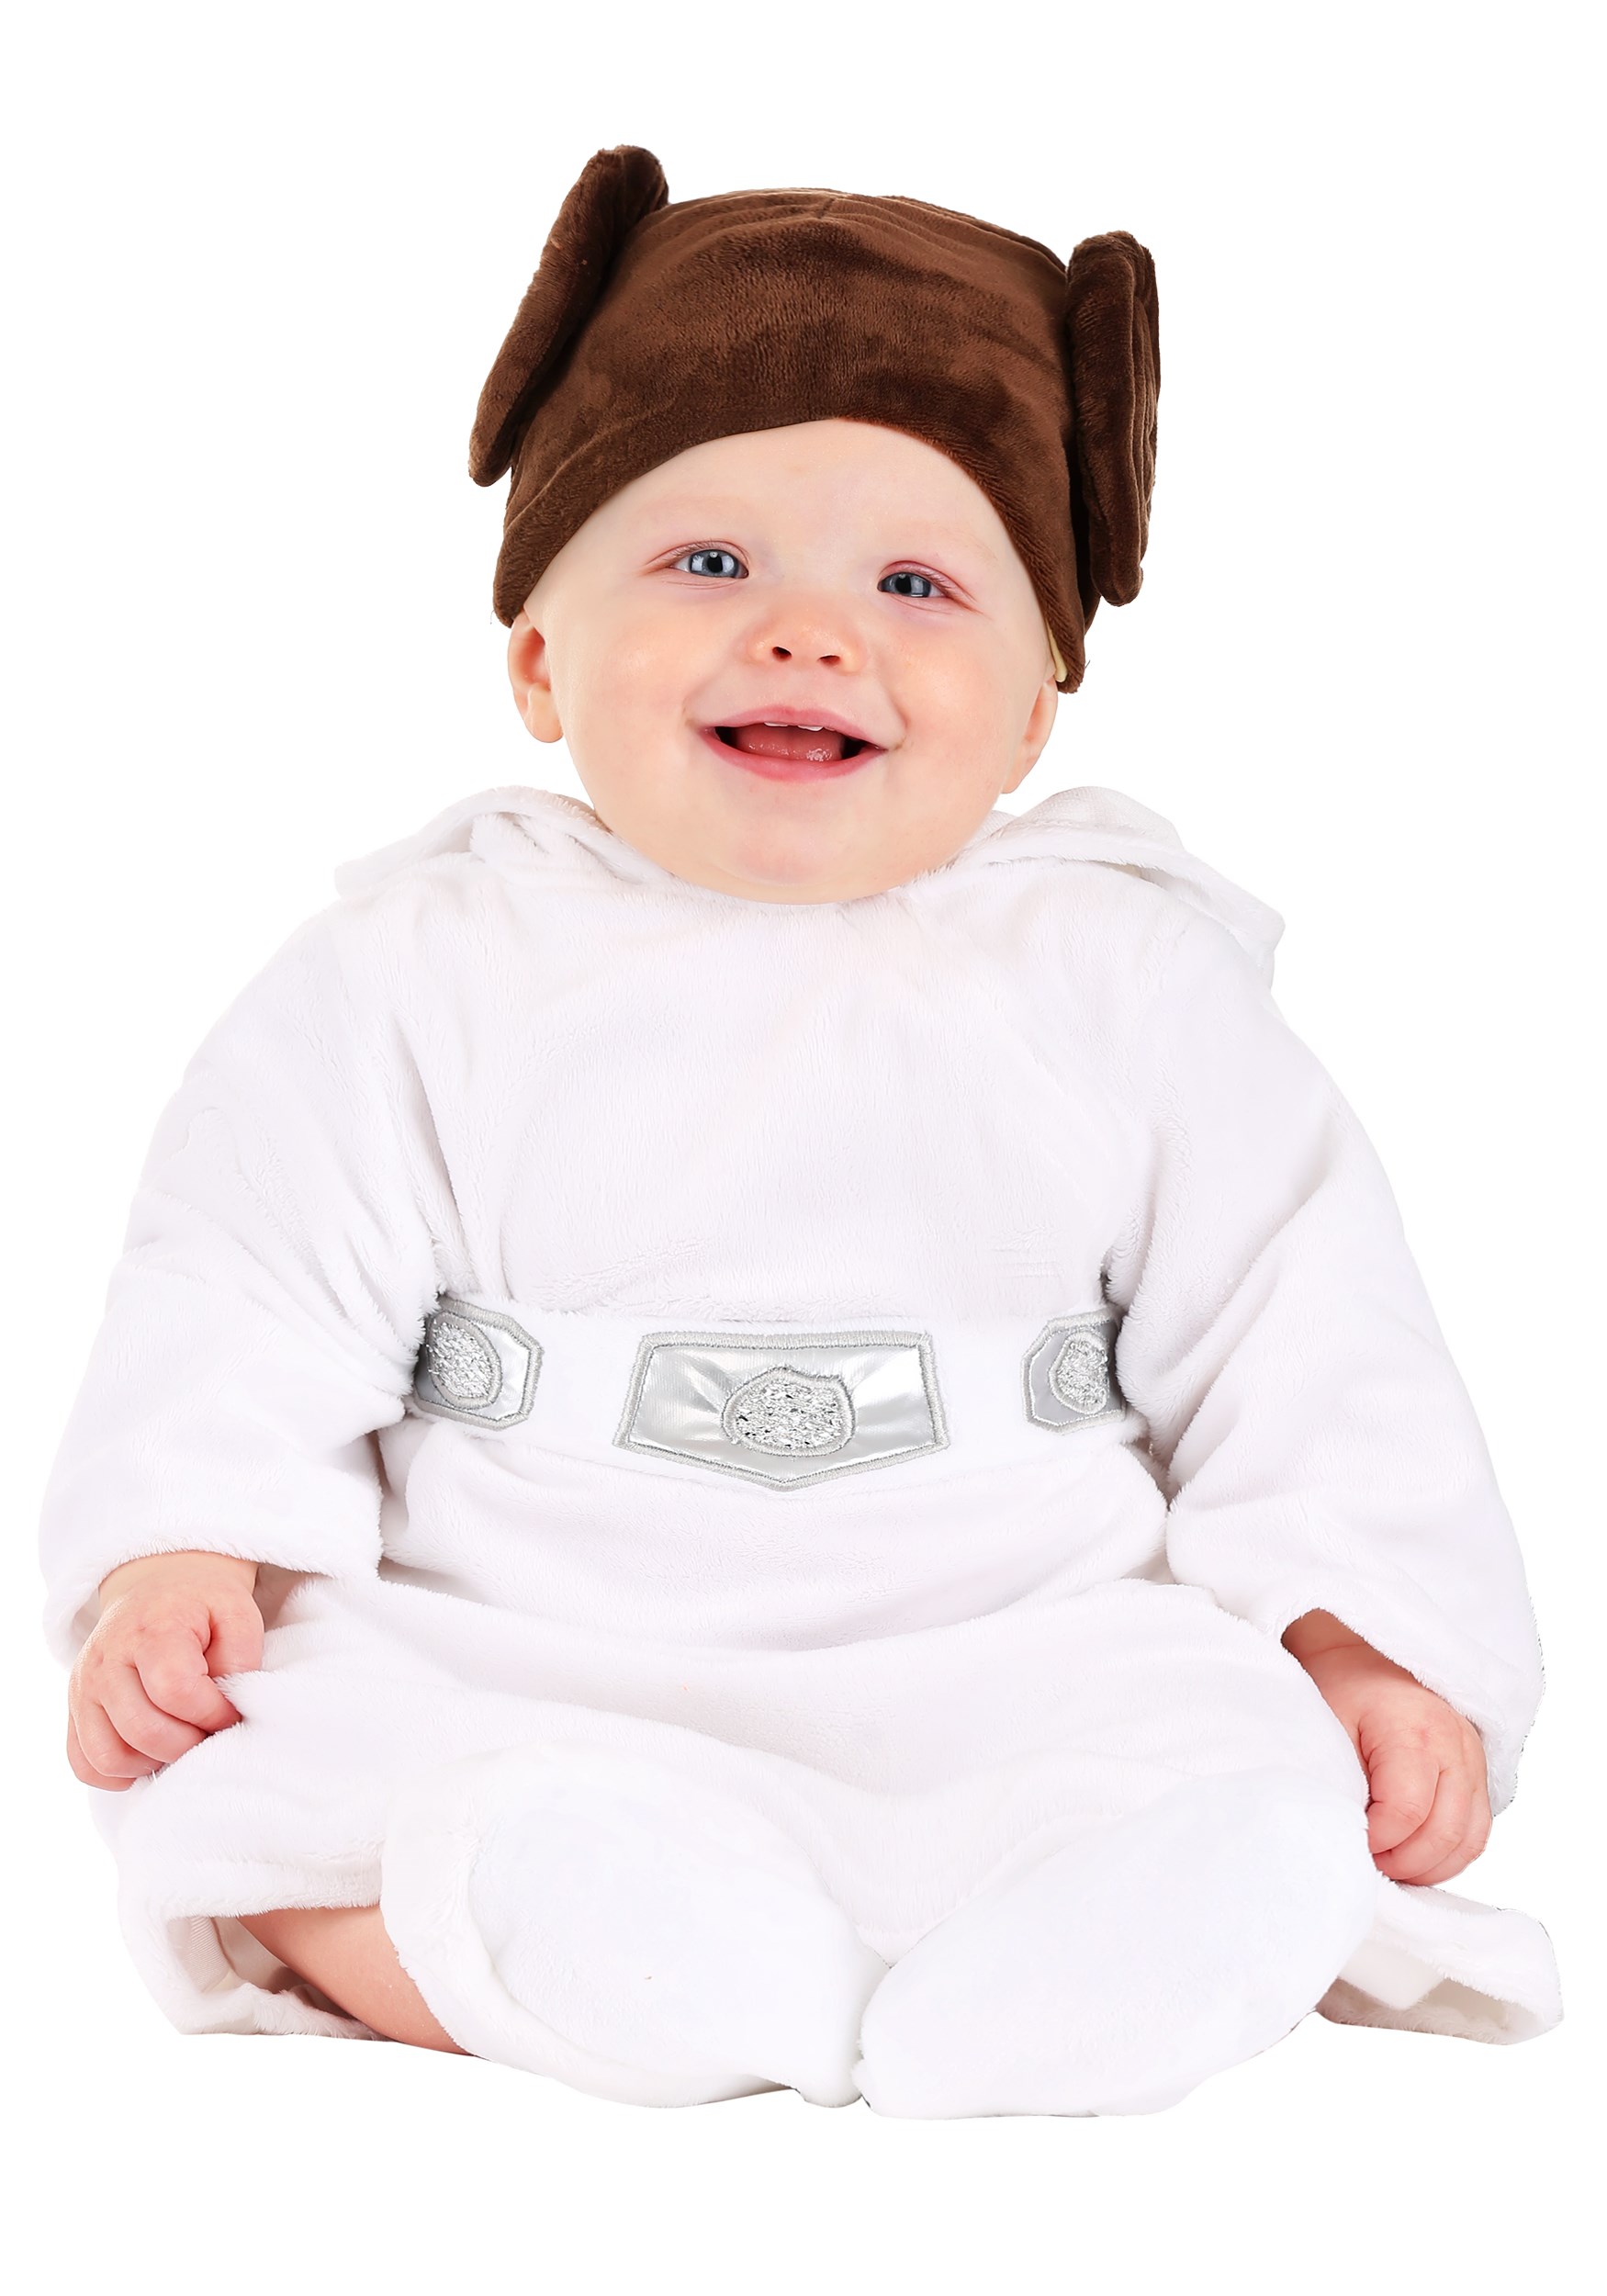 infant princess costume